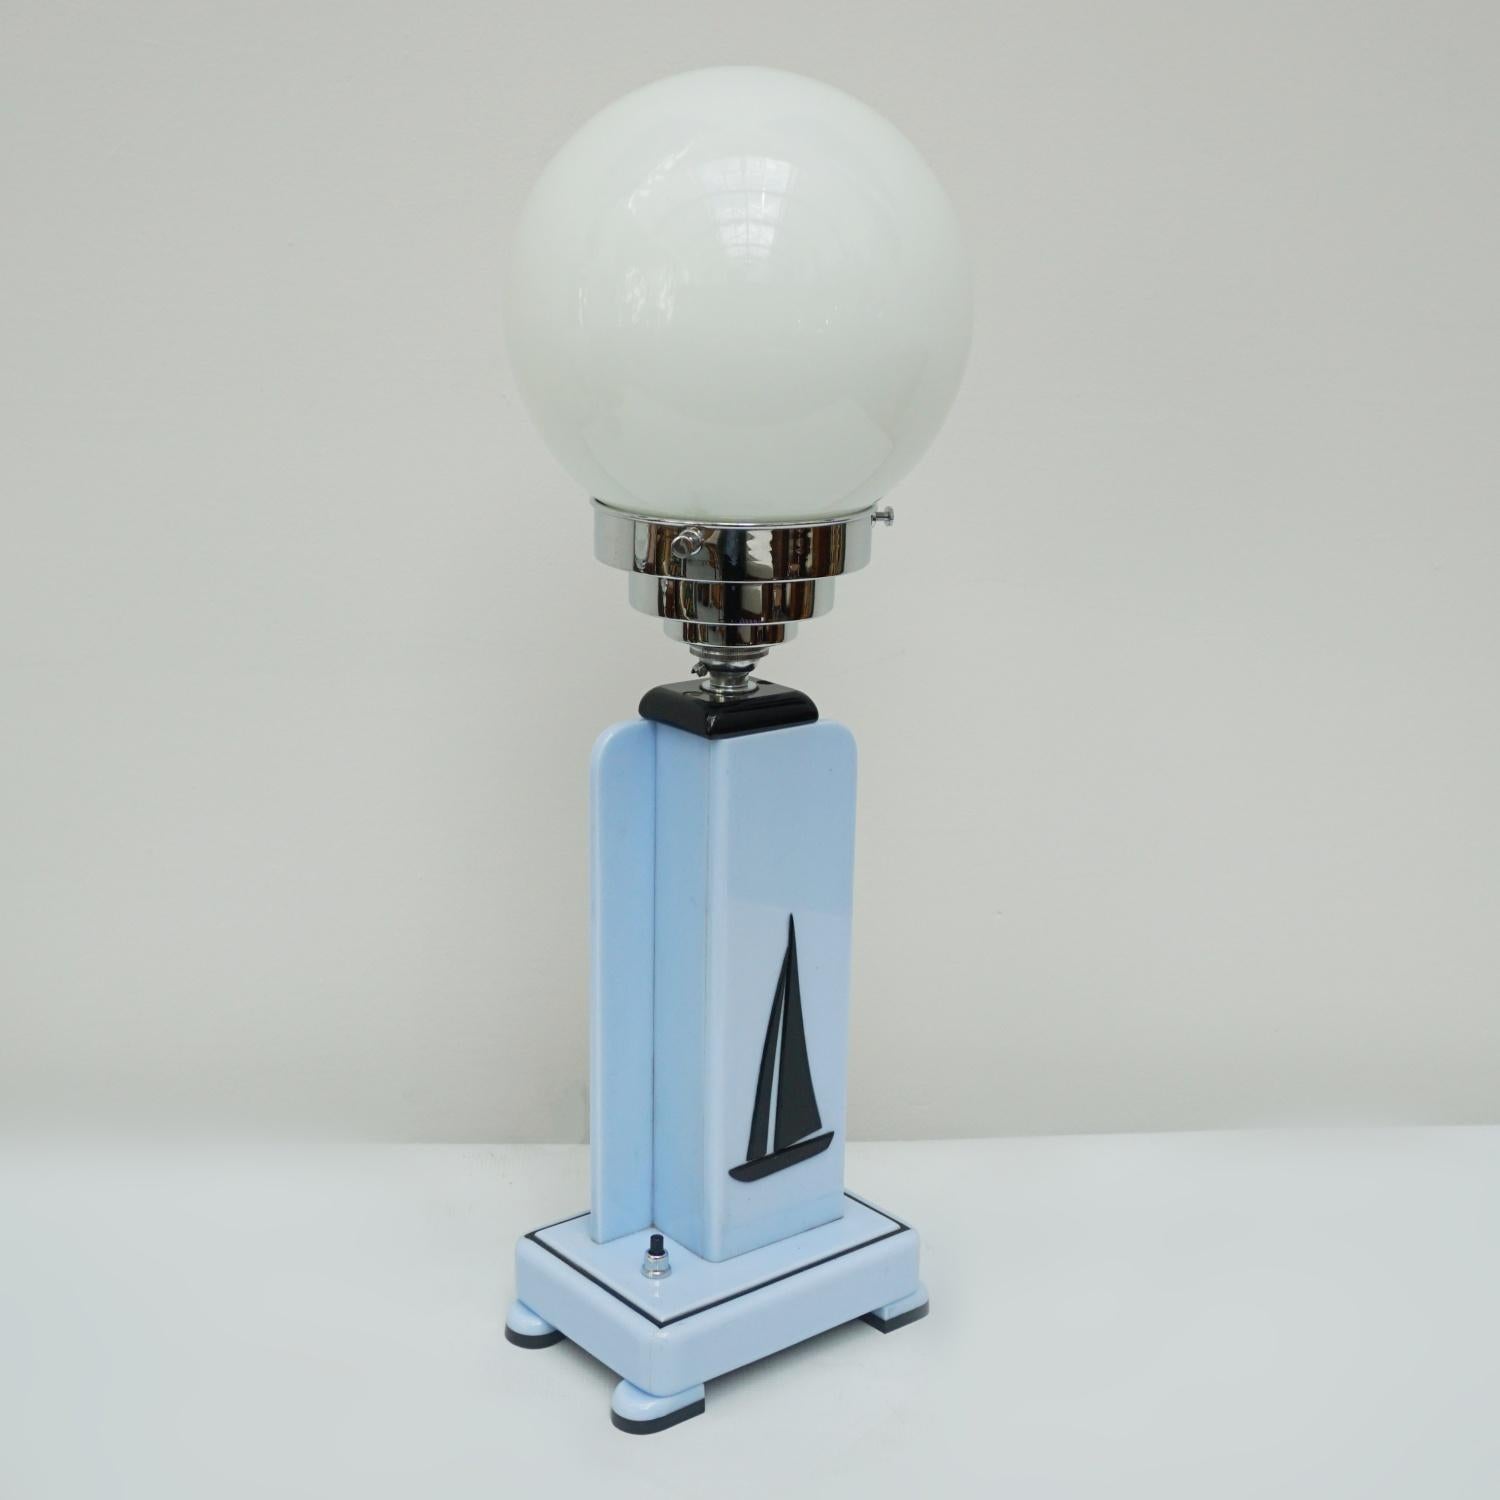 20th Century Yahtsman's Table Lamp